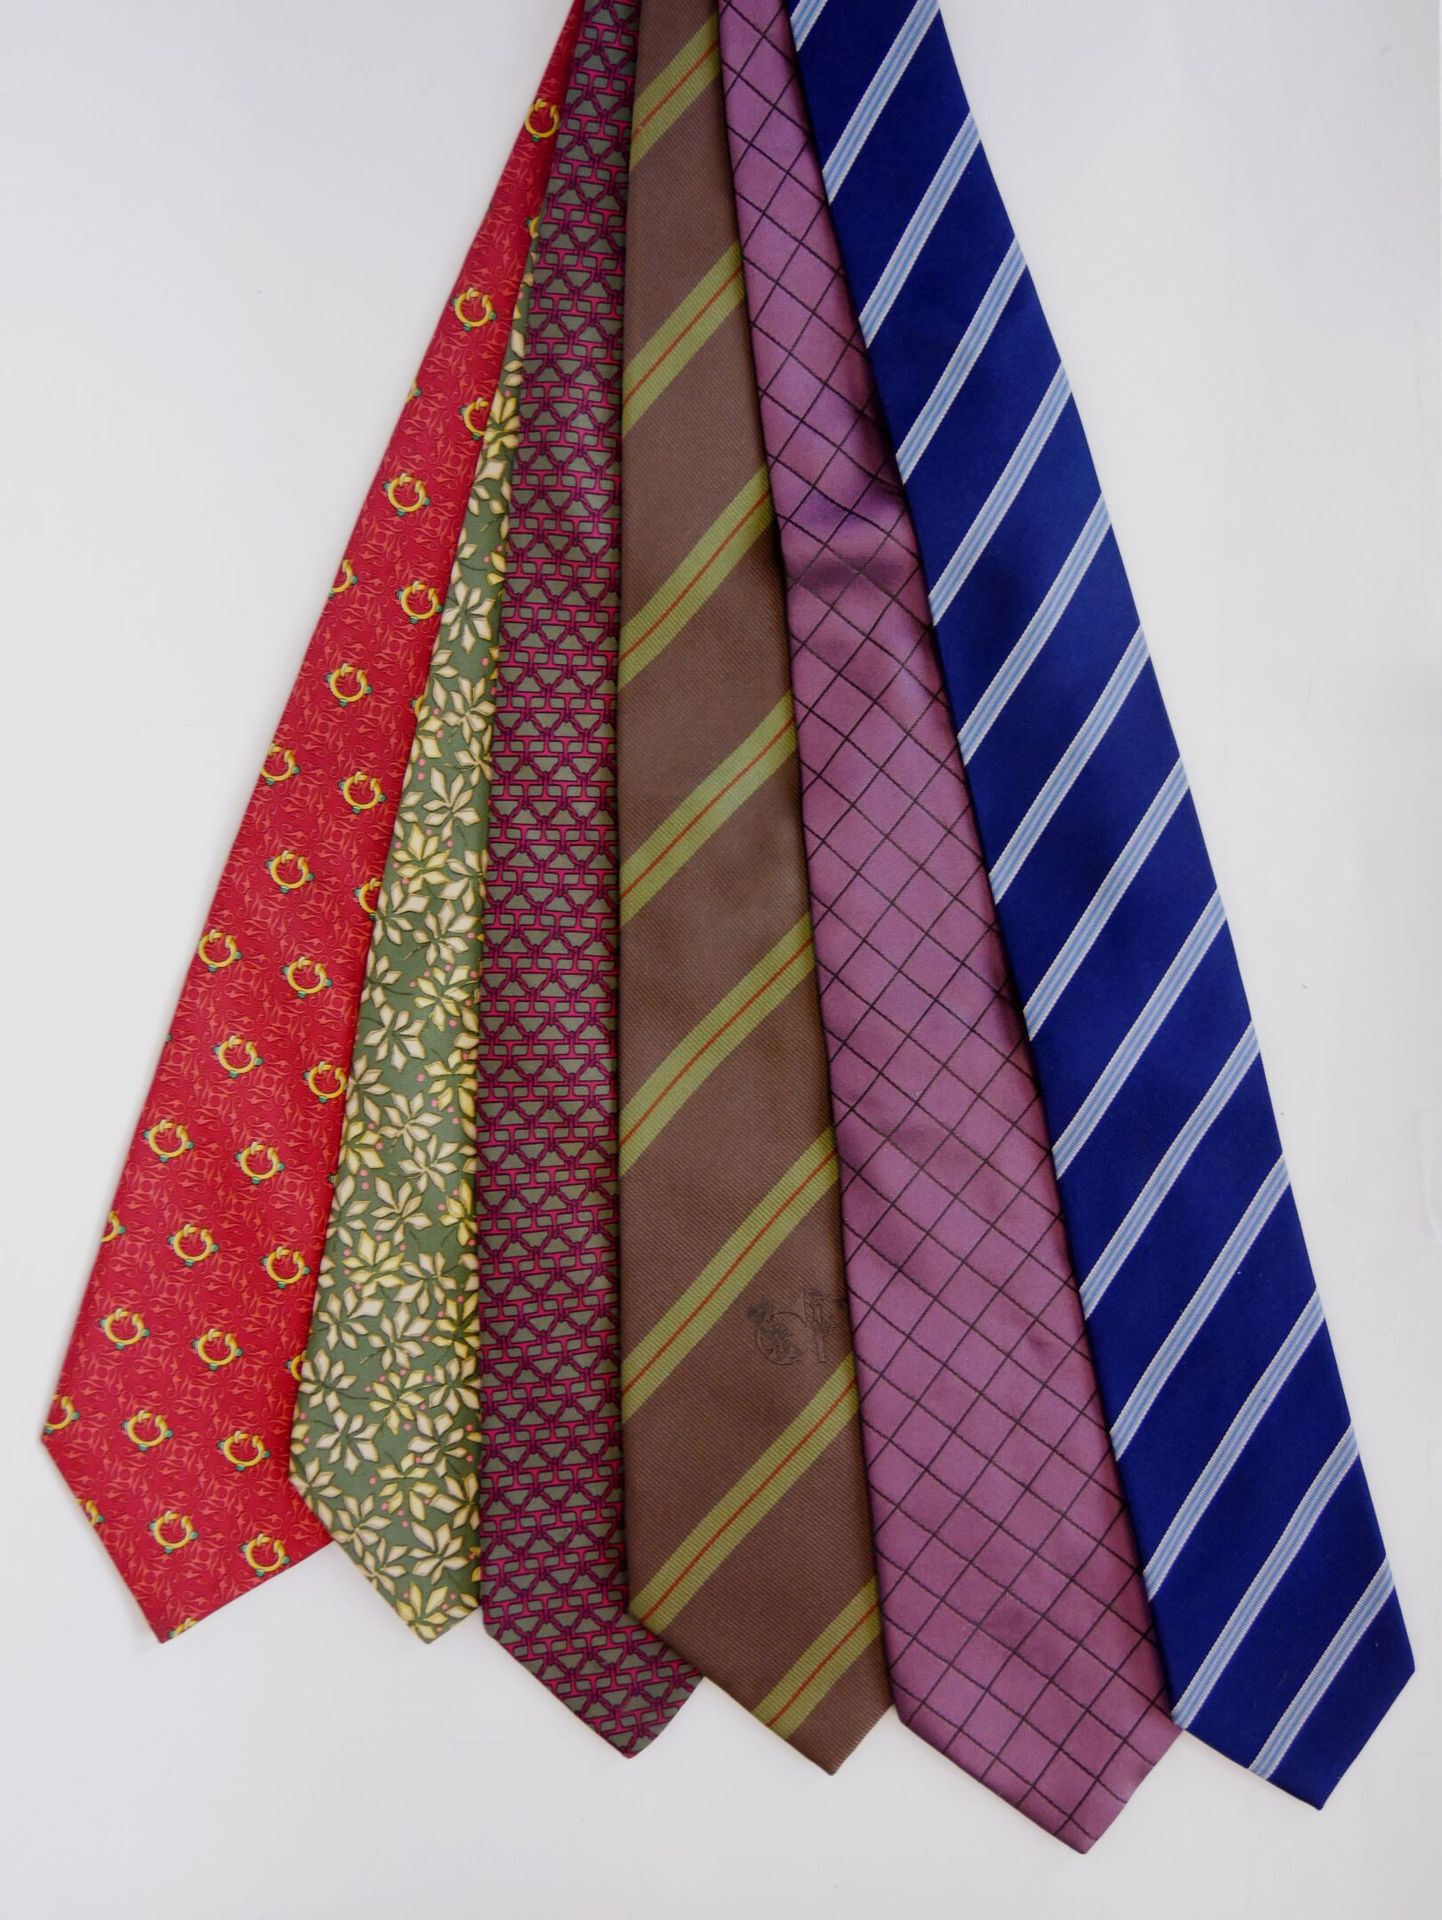 Null Set of 6 men's silk ties from the brands : 

- ARROW

- BURBERRY London 

-&hellip;